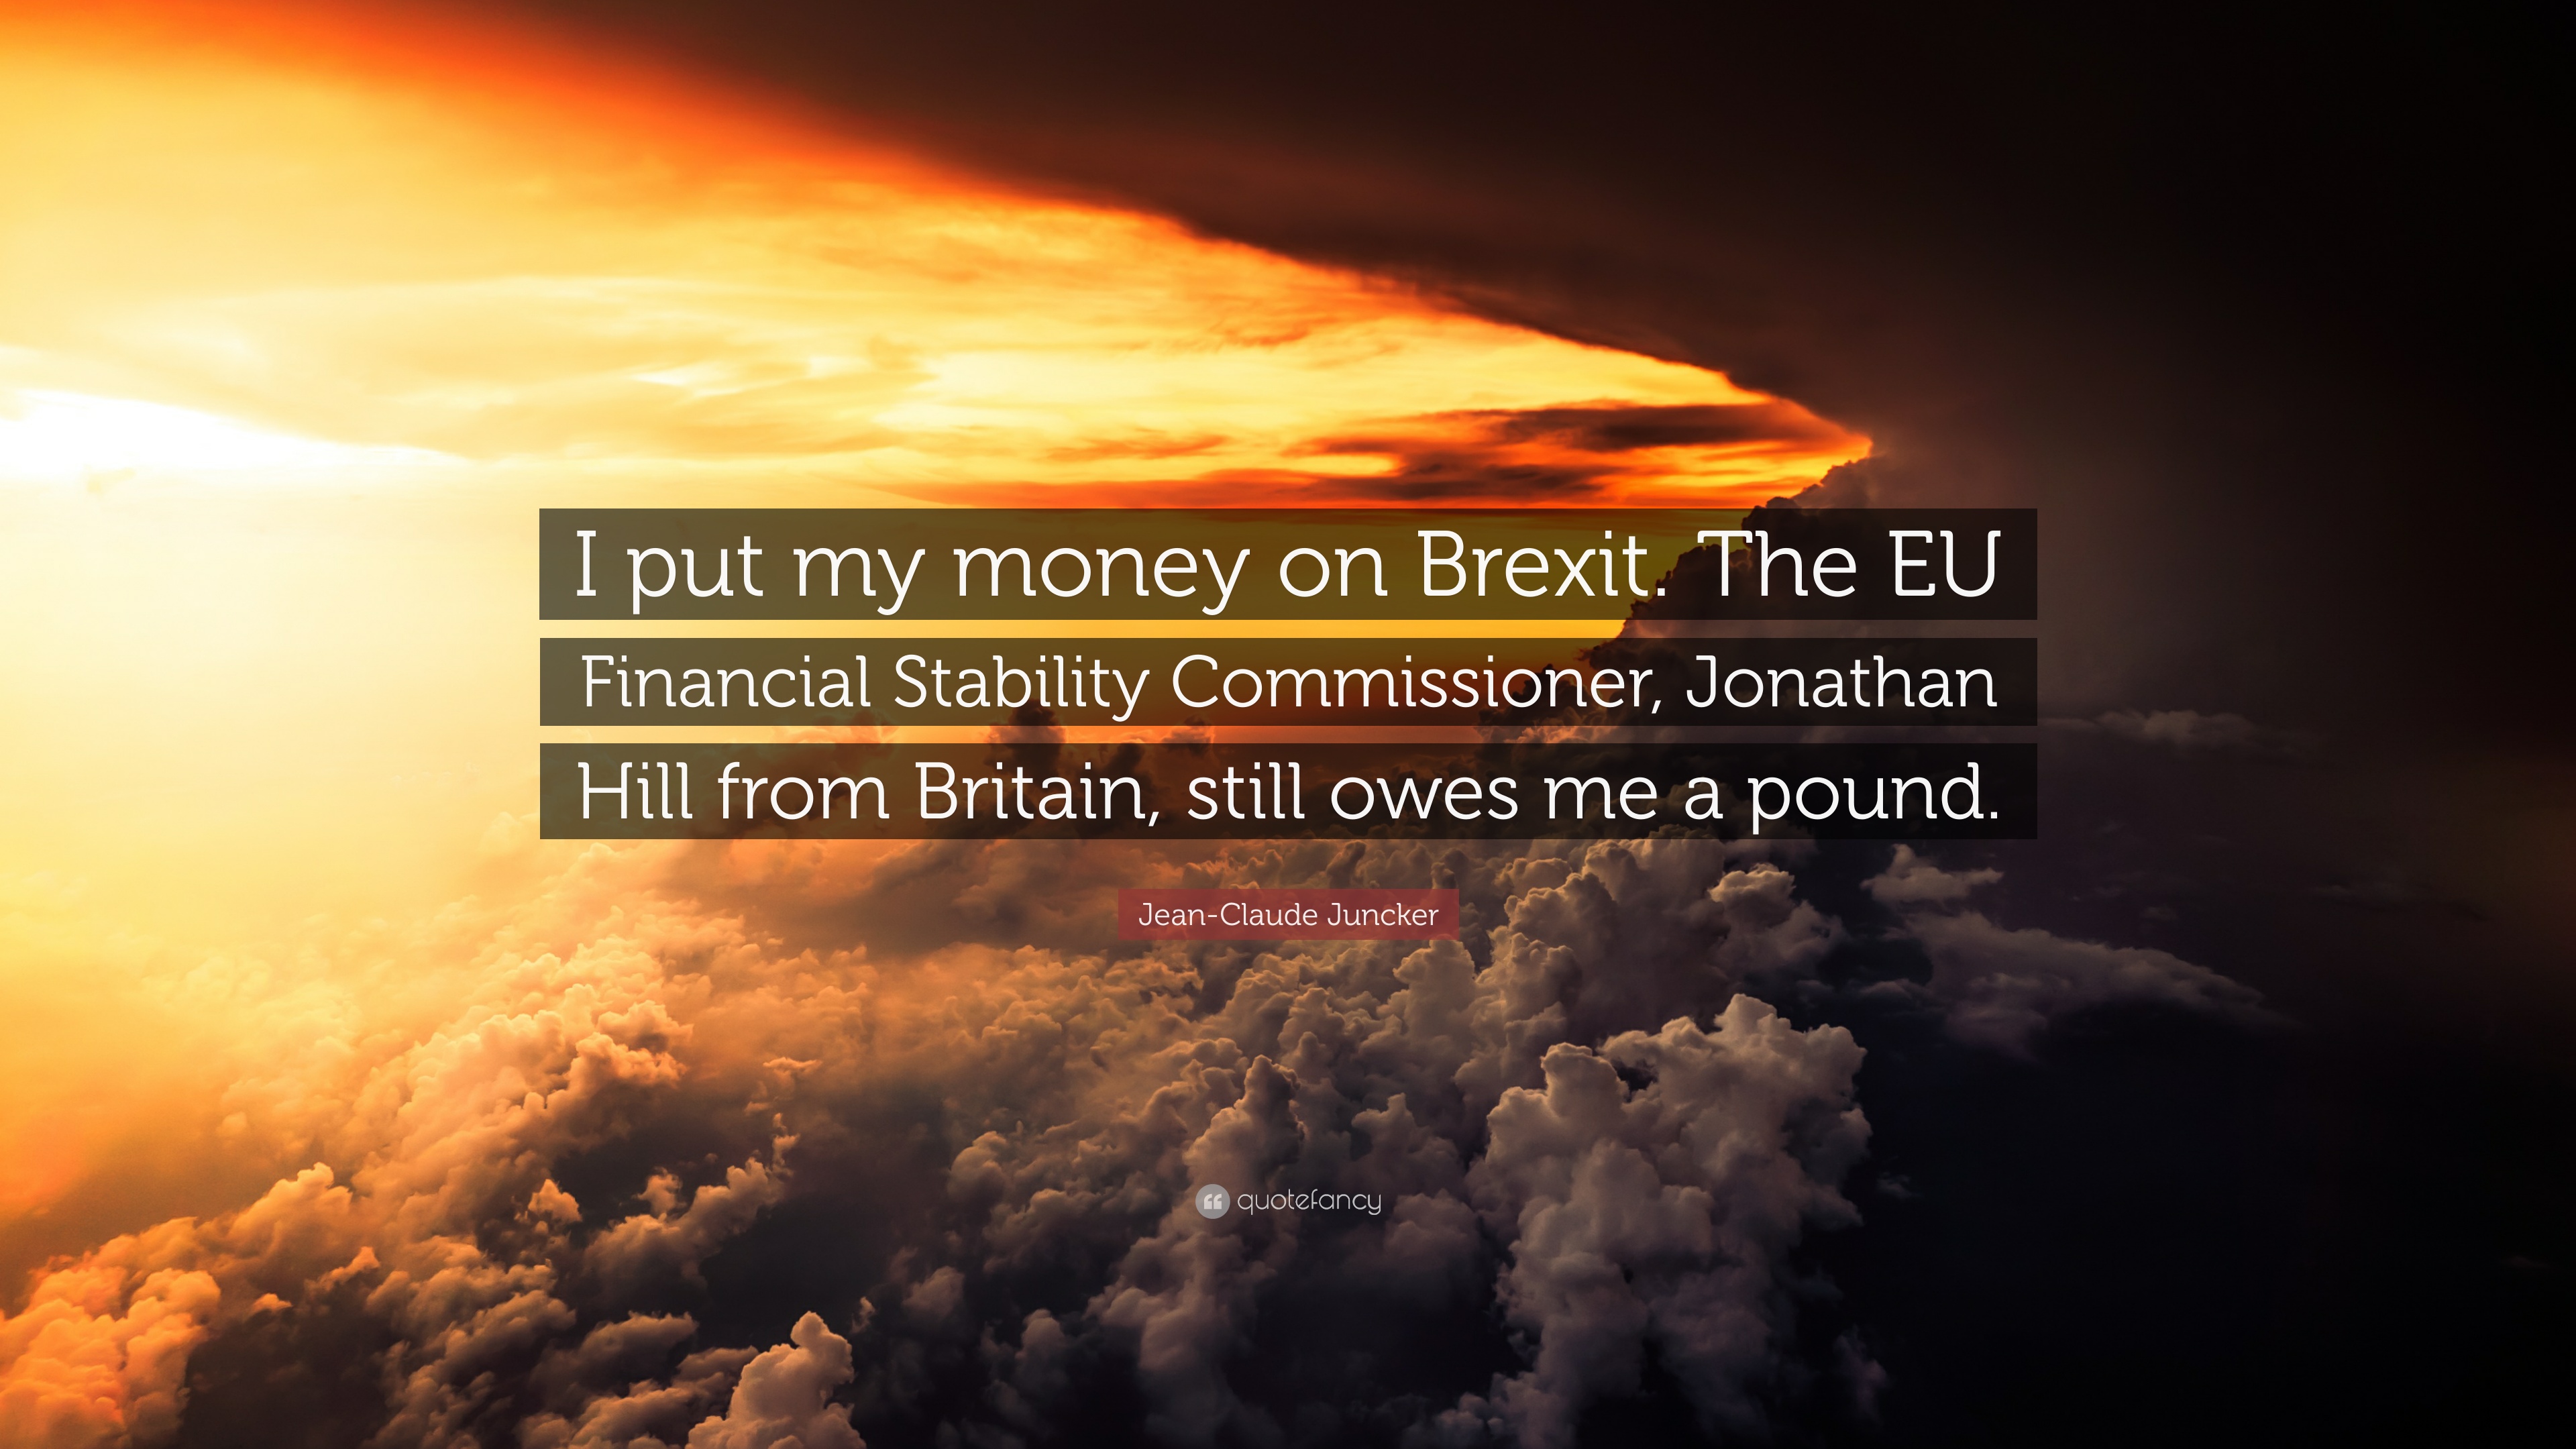 Jean Claude Juncker Quote: “I Put My Money On Brexit. The EU